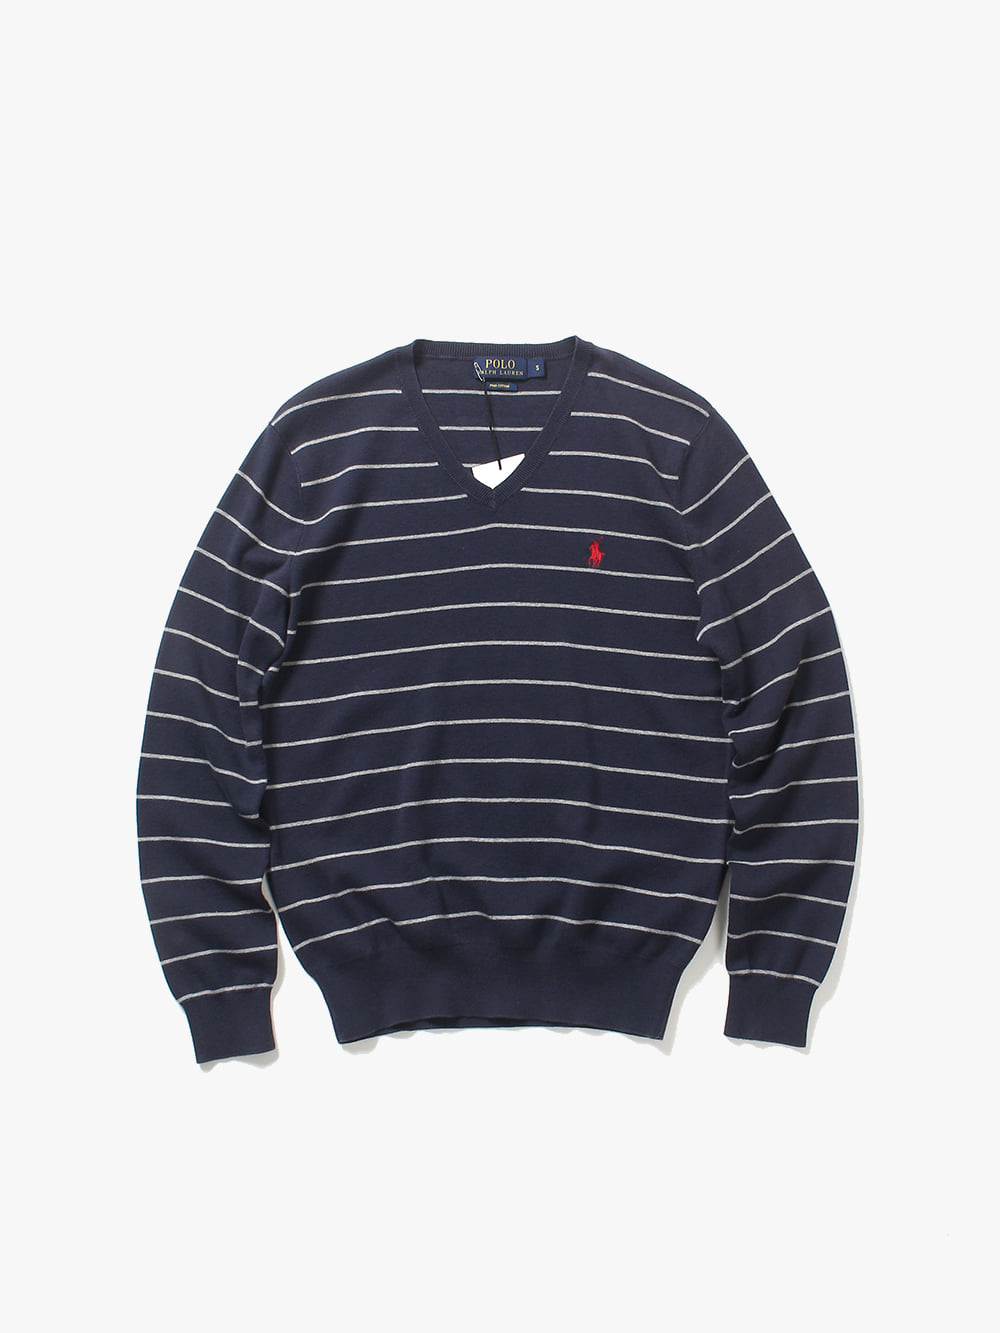 [ S ] Polo Ralph Lauren Sweater (6454)